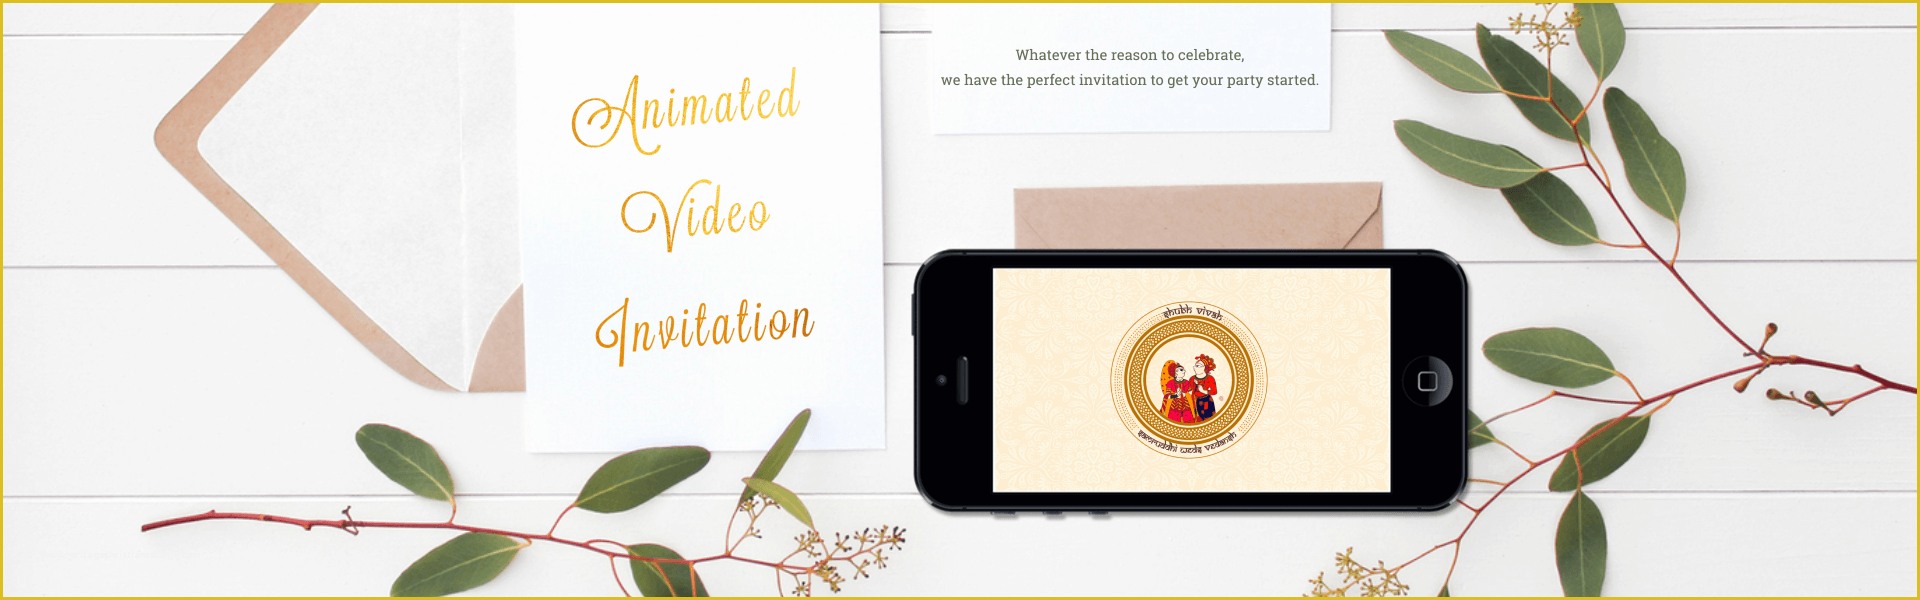 Animated Invitation Templates Free Of Happy Invites Invitation Video Animated Wedding